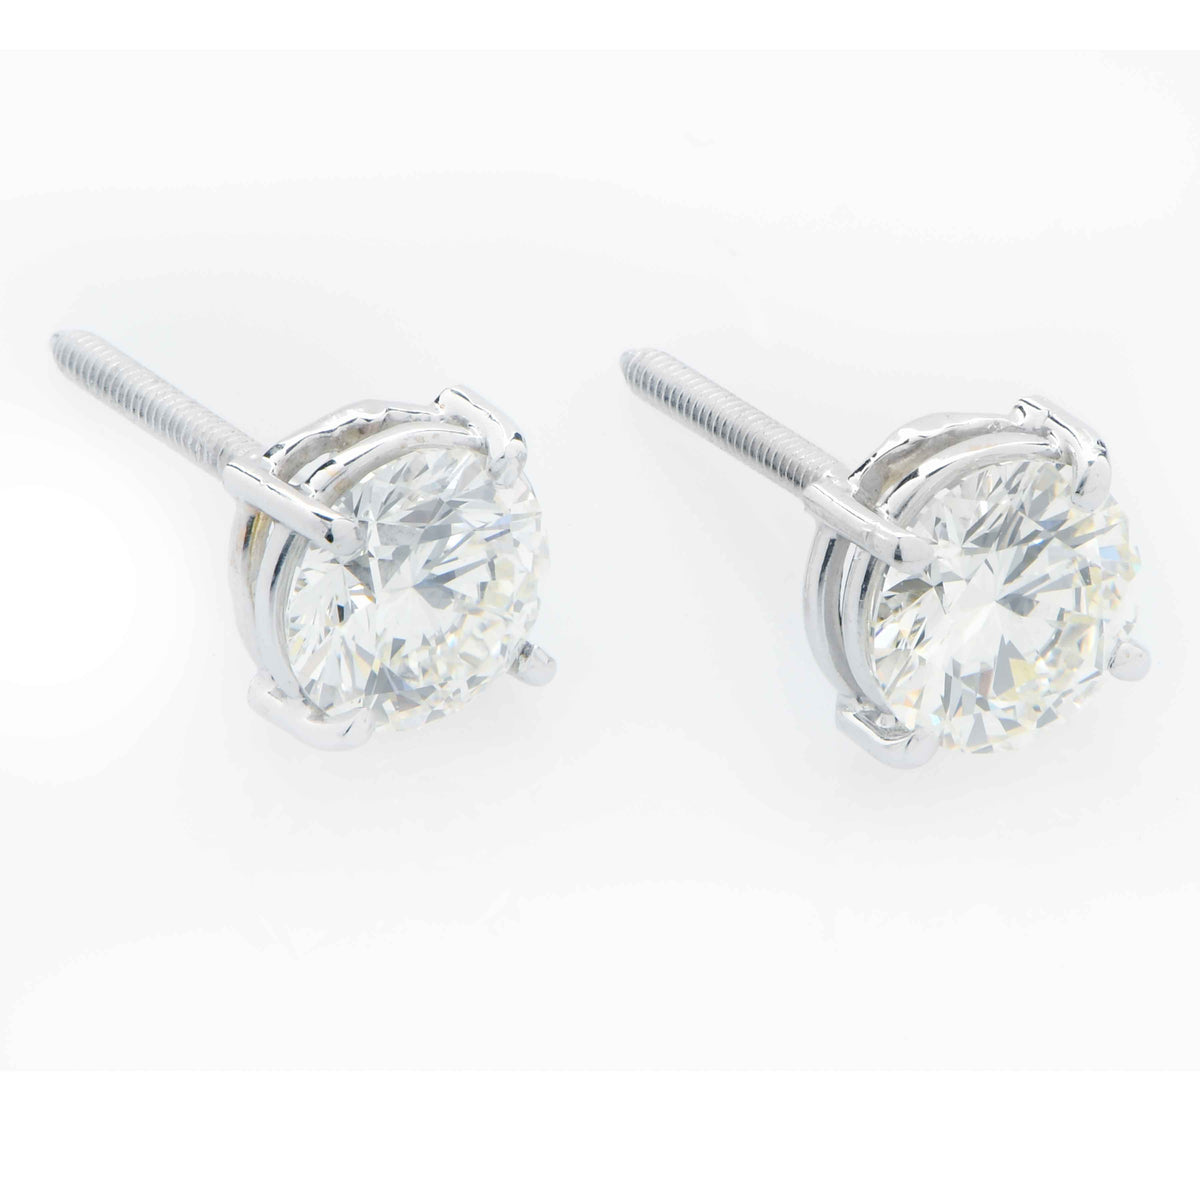 1.48 Carat Total Weight Diamond Stud Earrings